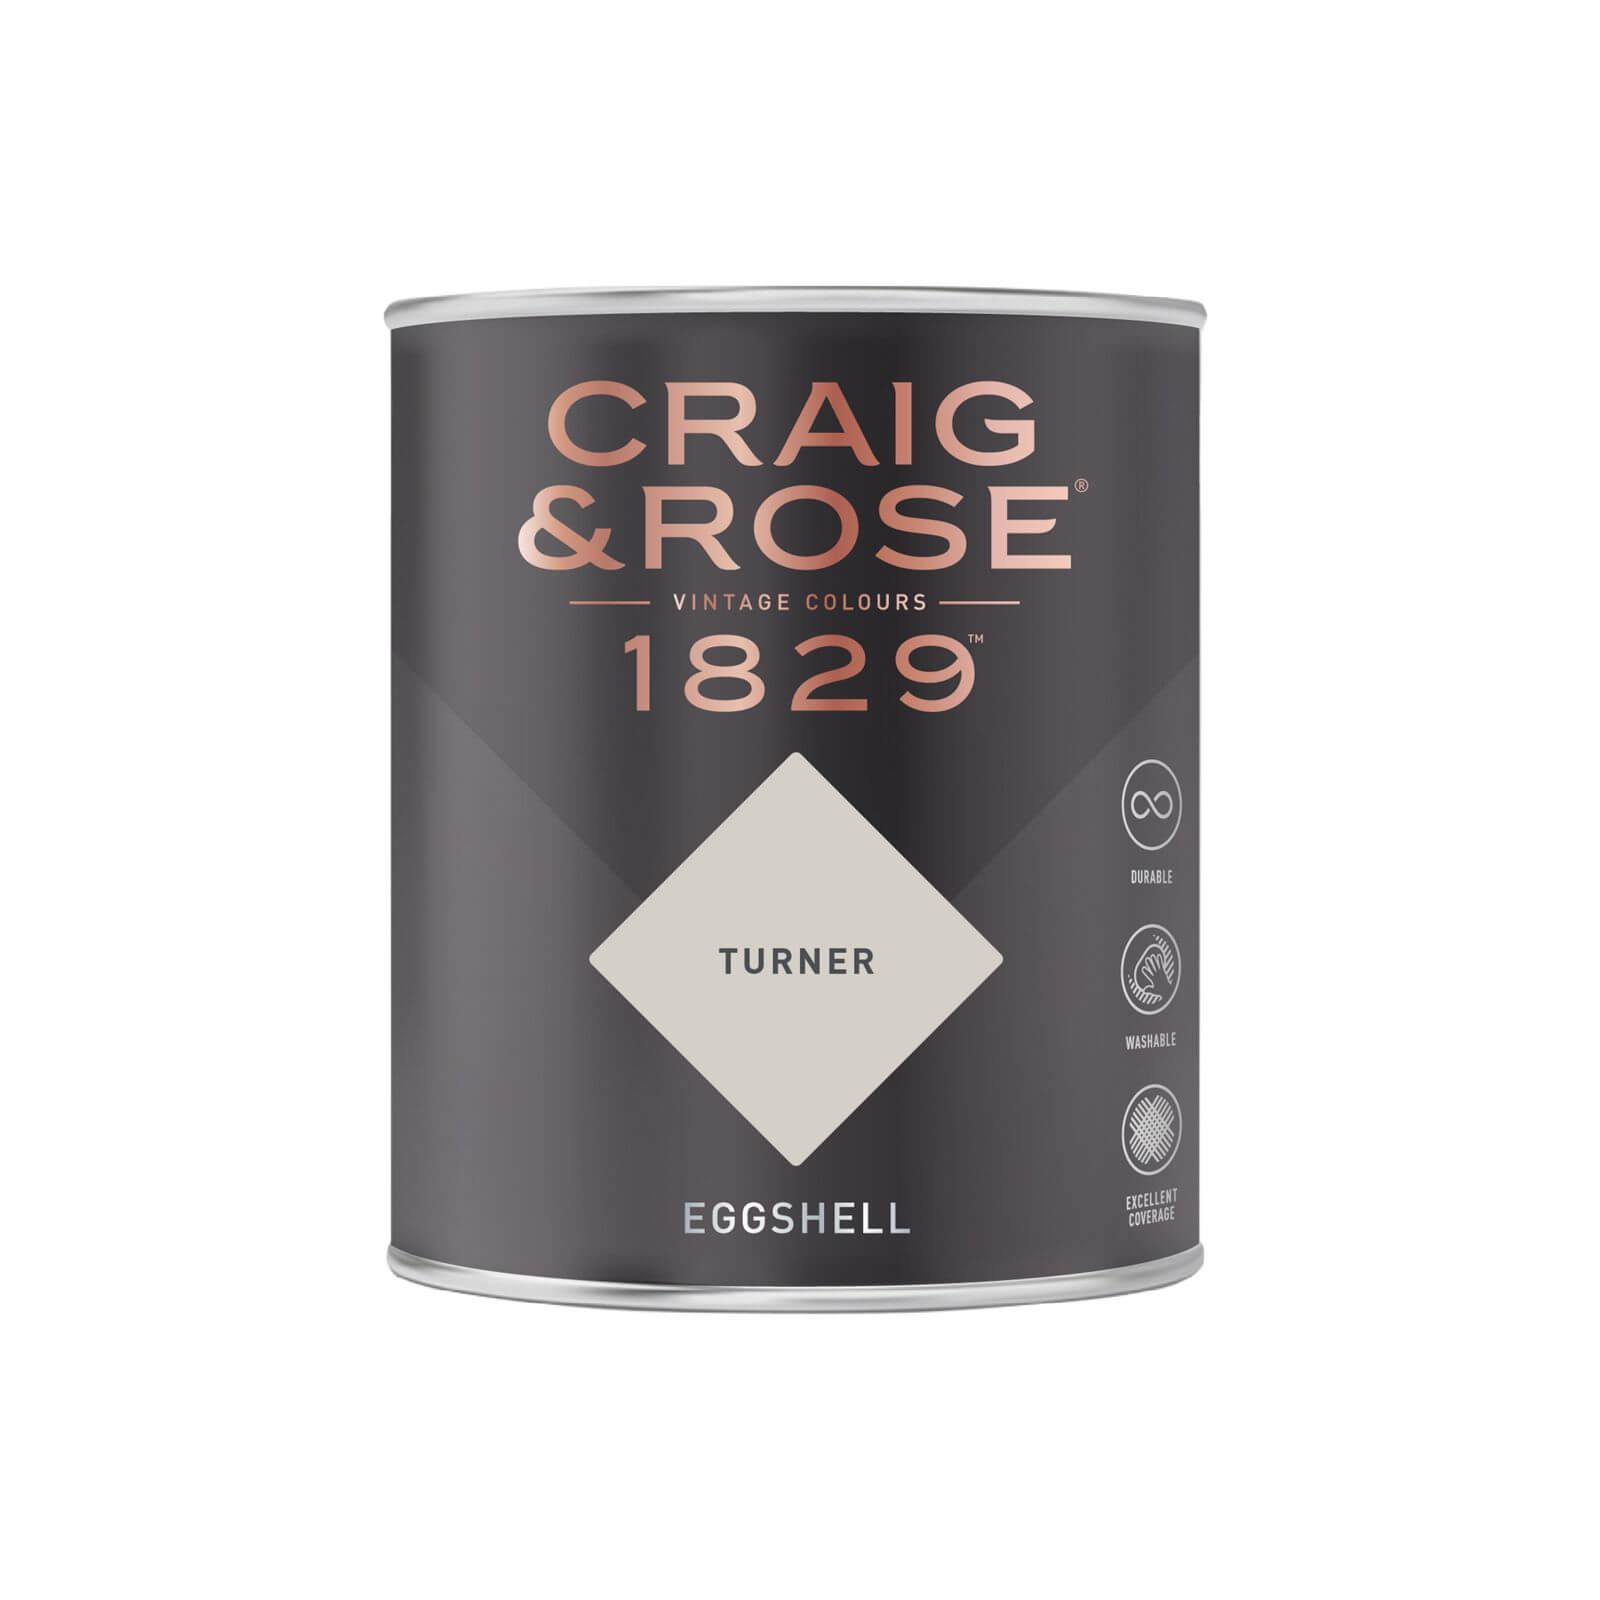 Craig & Rose 1829 Eggshell Paint Turner - 750ml